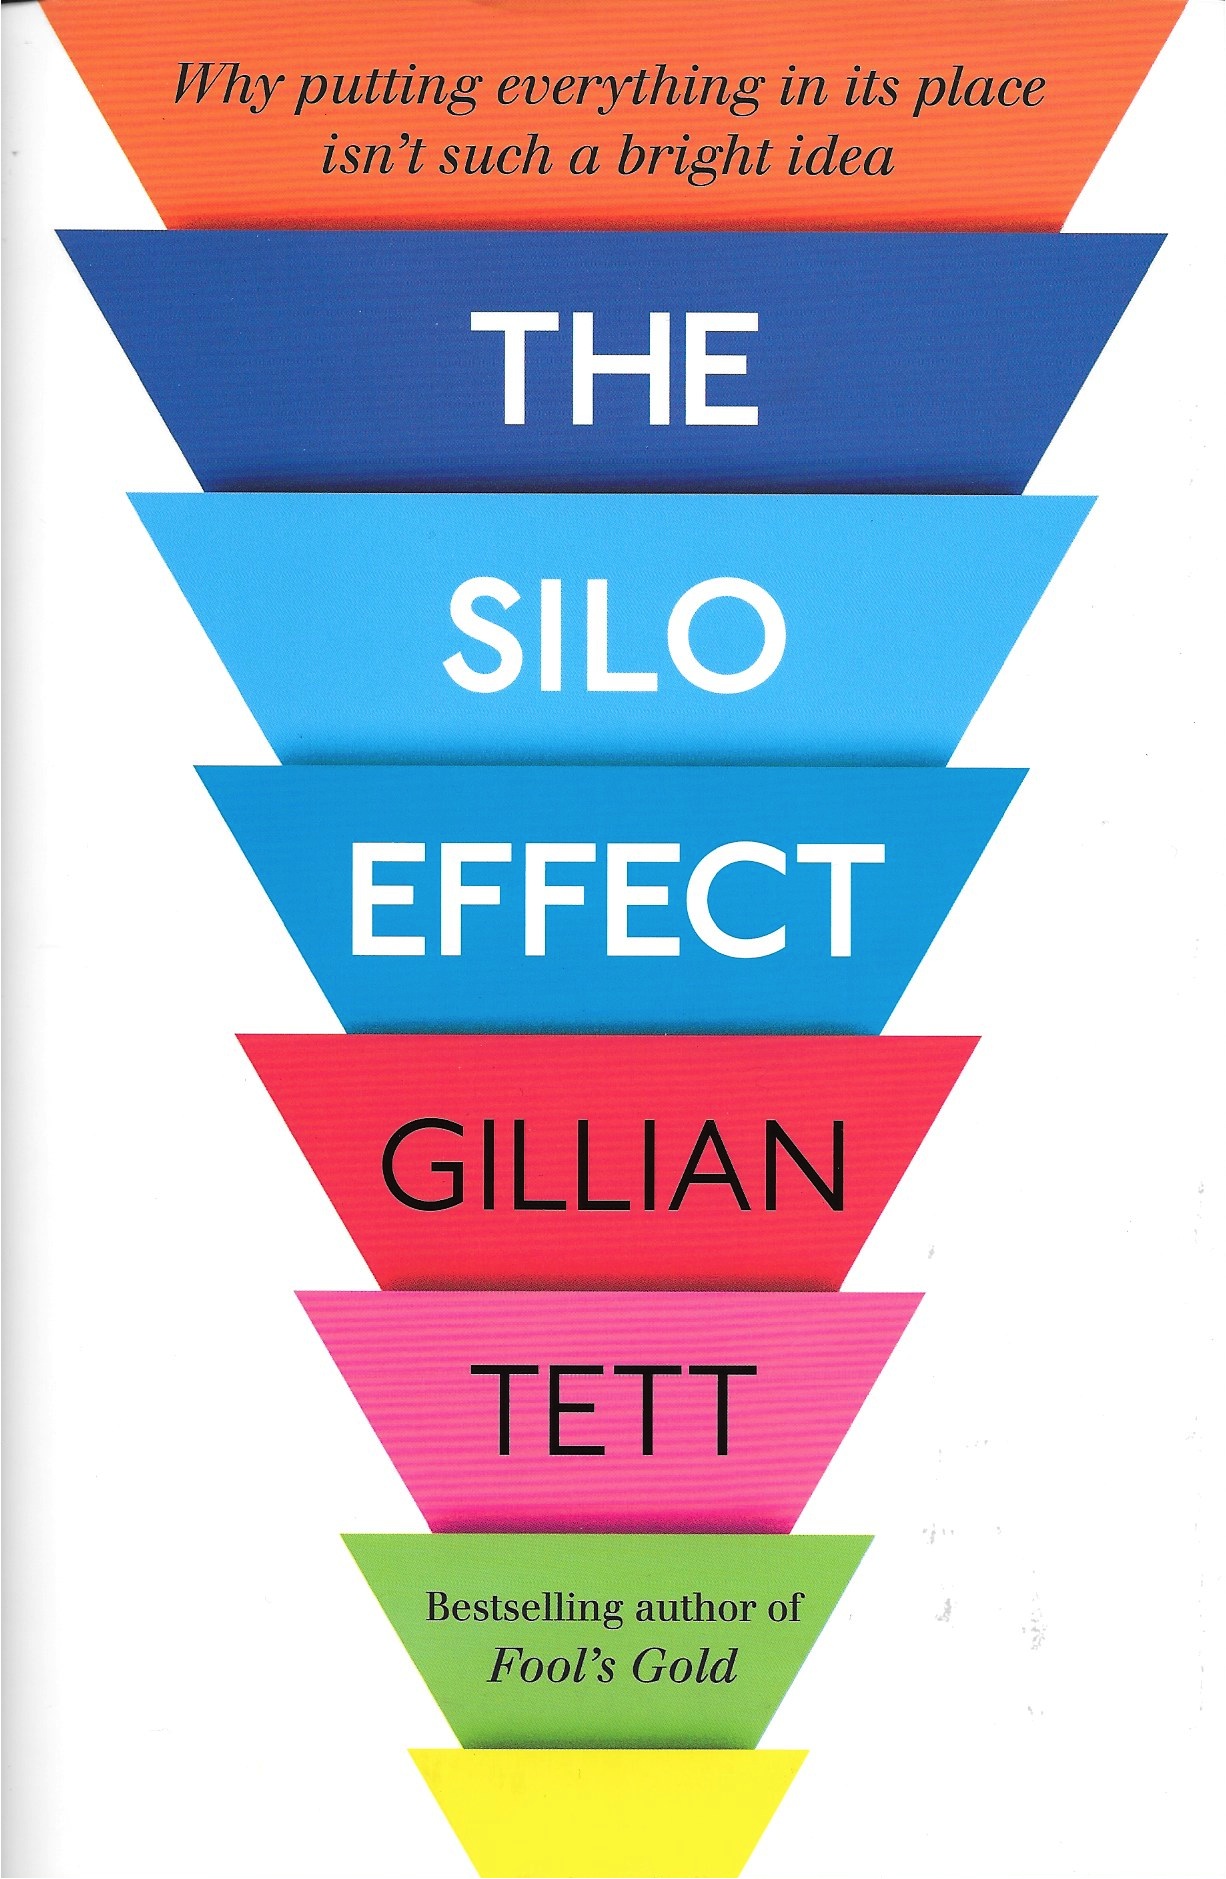 Why effect. Silo. Почему put. Tett. Silo thinking.